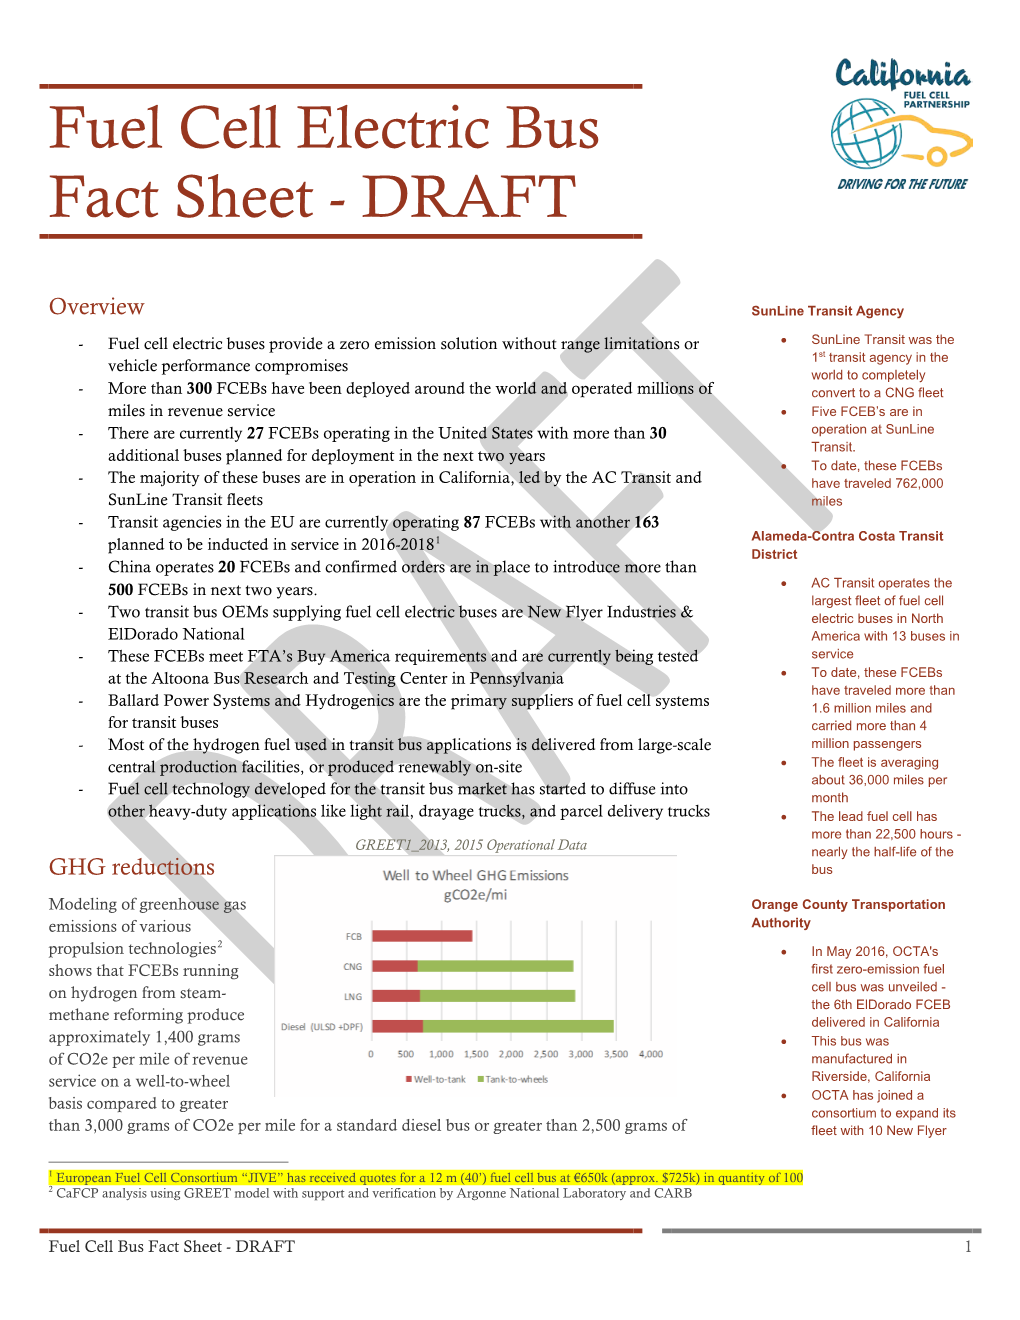 Fuel Cell Bus Fact Sheet - DRAFT 1